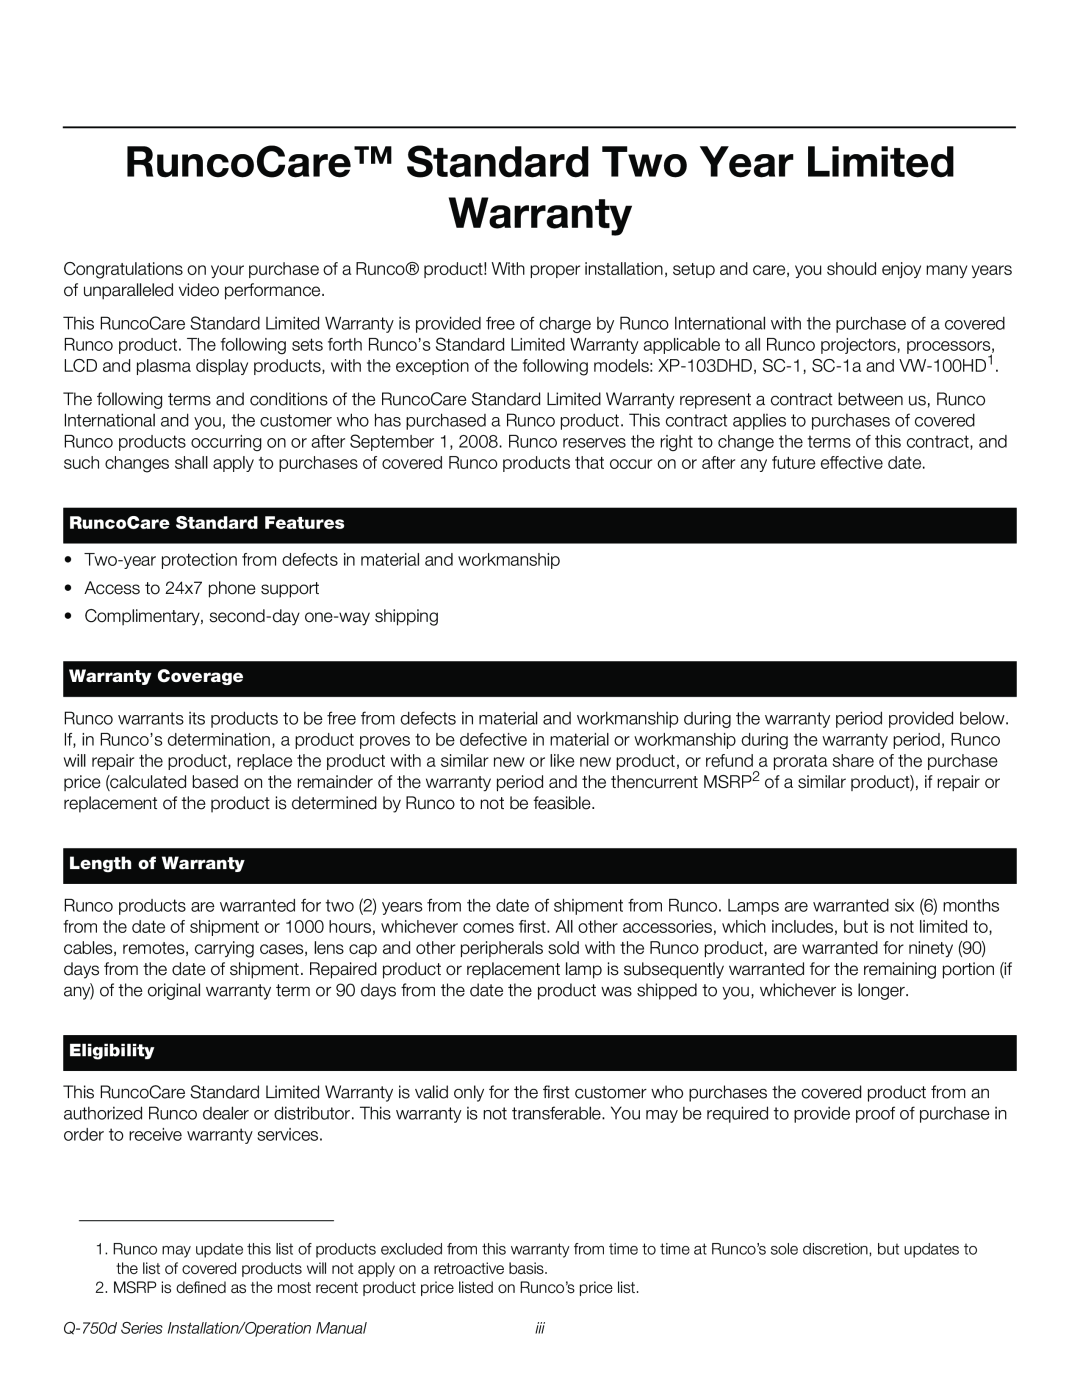 Runco Q-750D RuncoCare Standard Two Year Limited Warranty, RuncoCare Standard Features, Warranty Coverage, Eligibility 